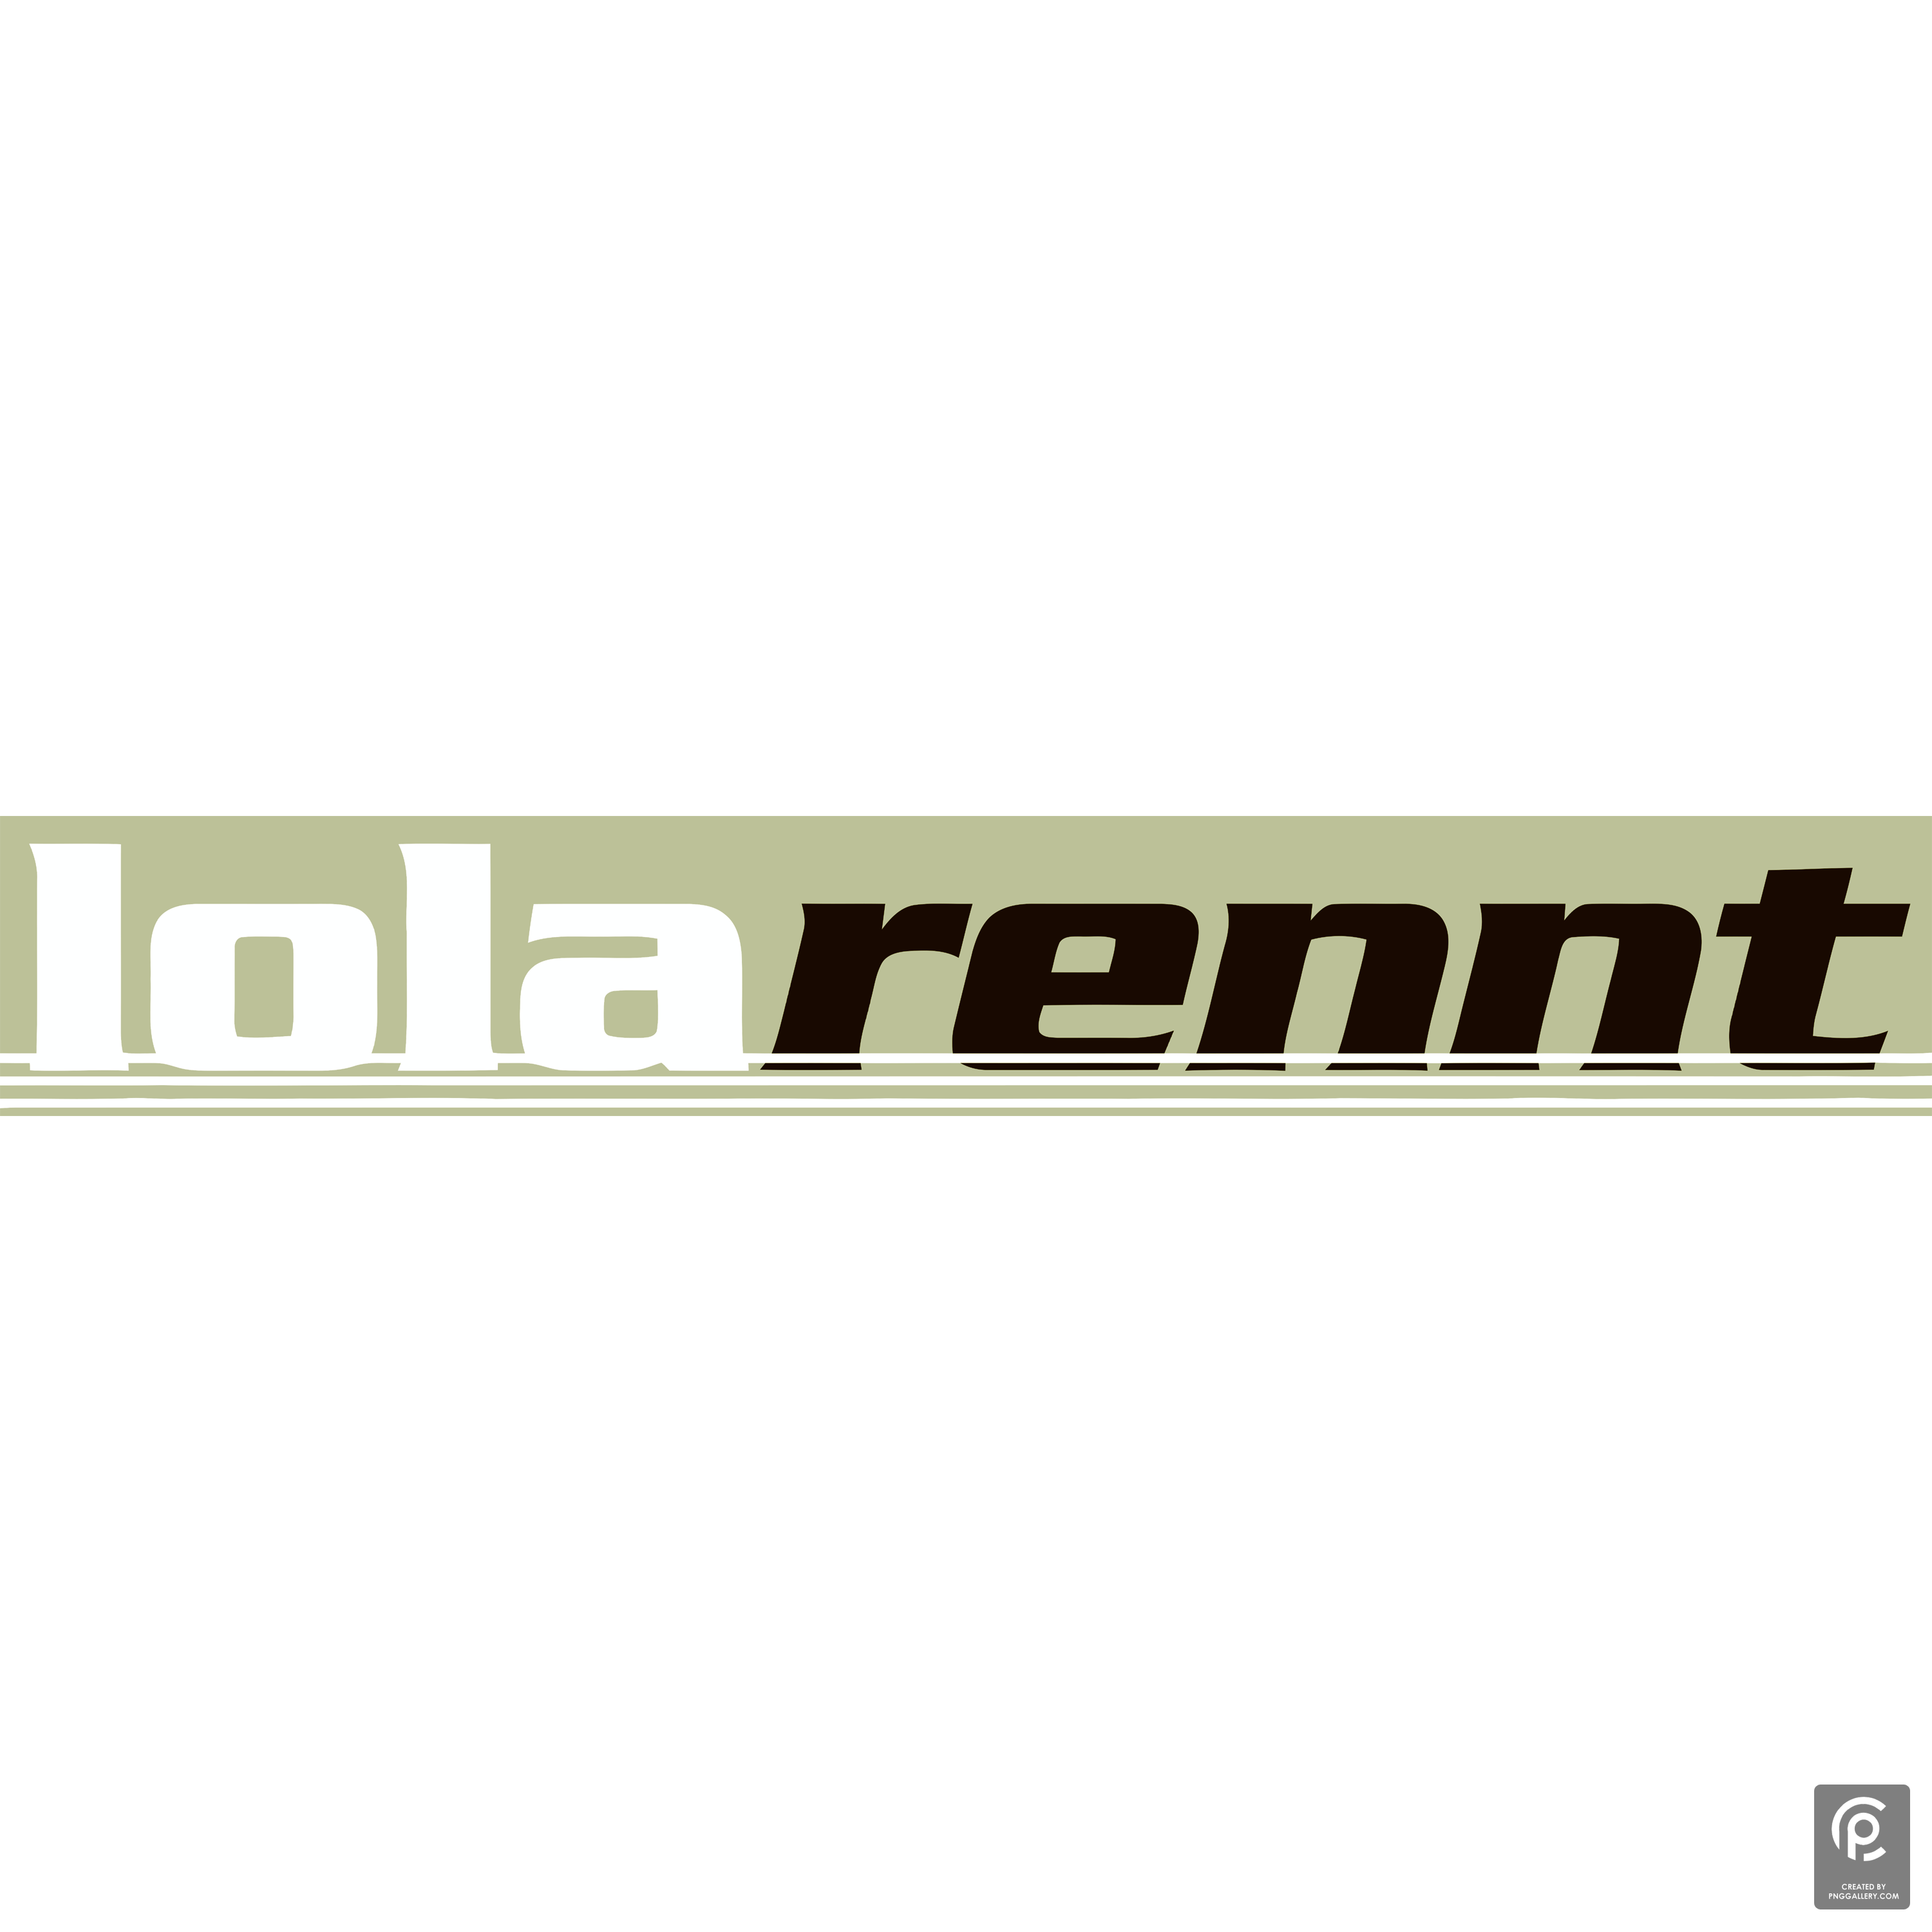 Lola Rennt Logo Transparent Photo